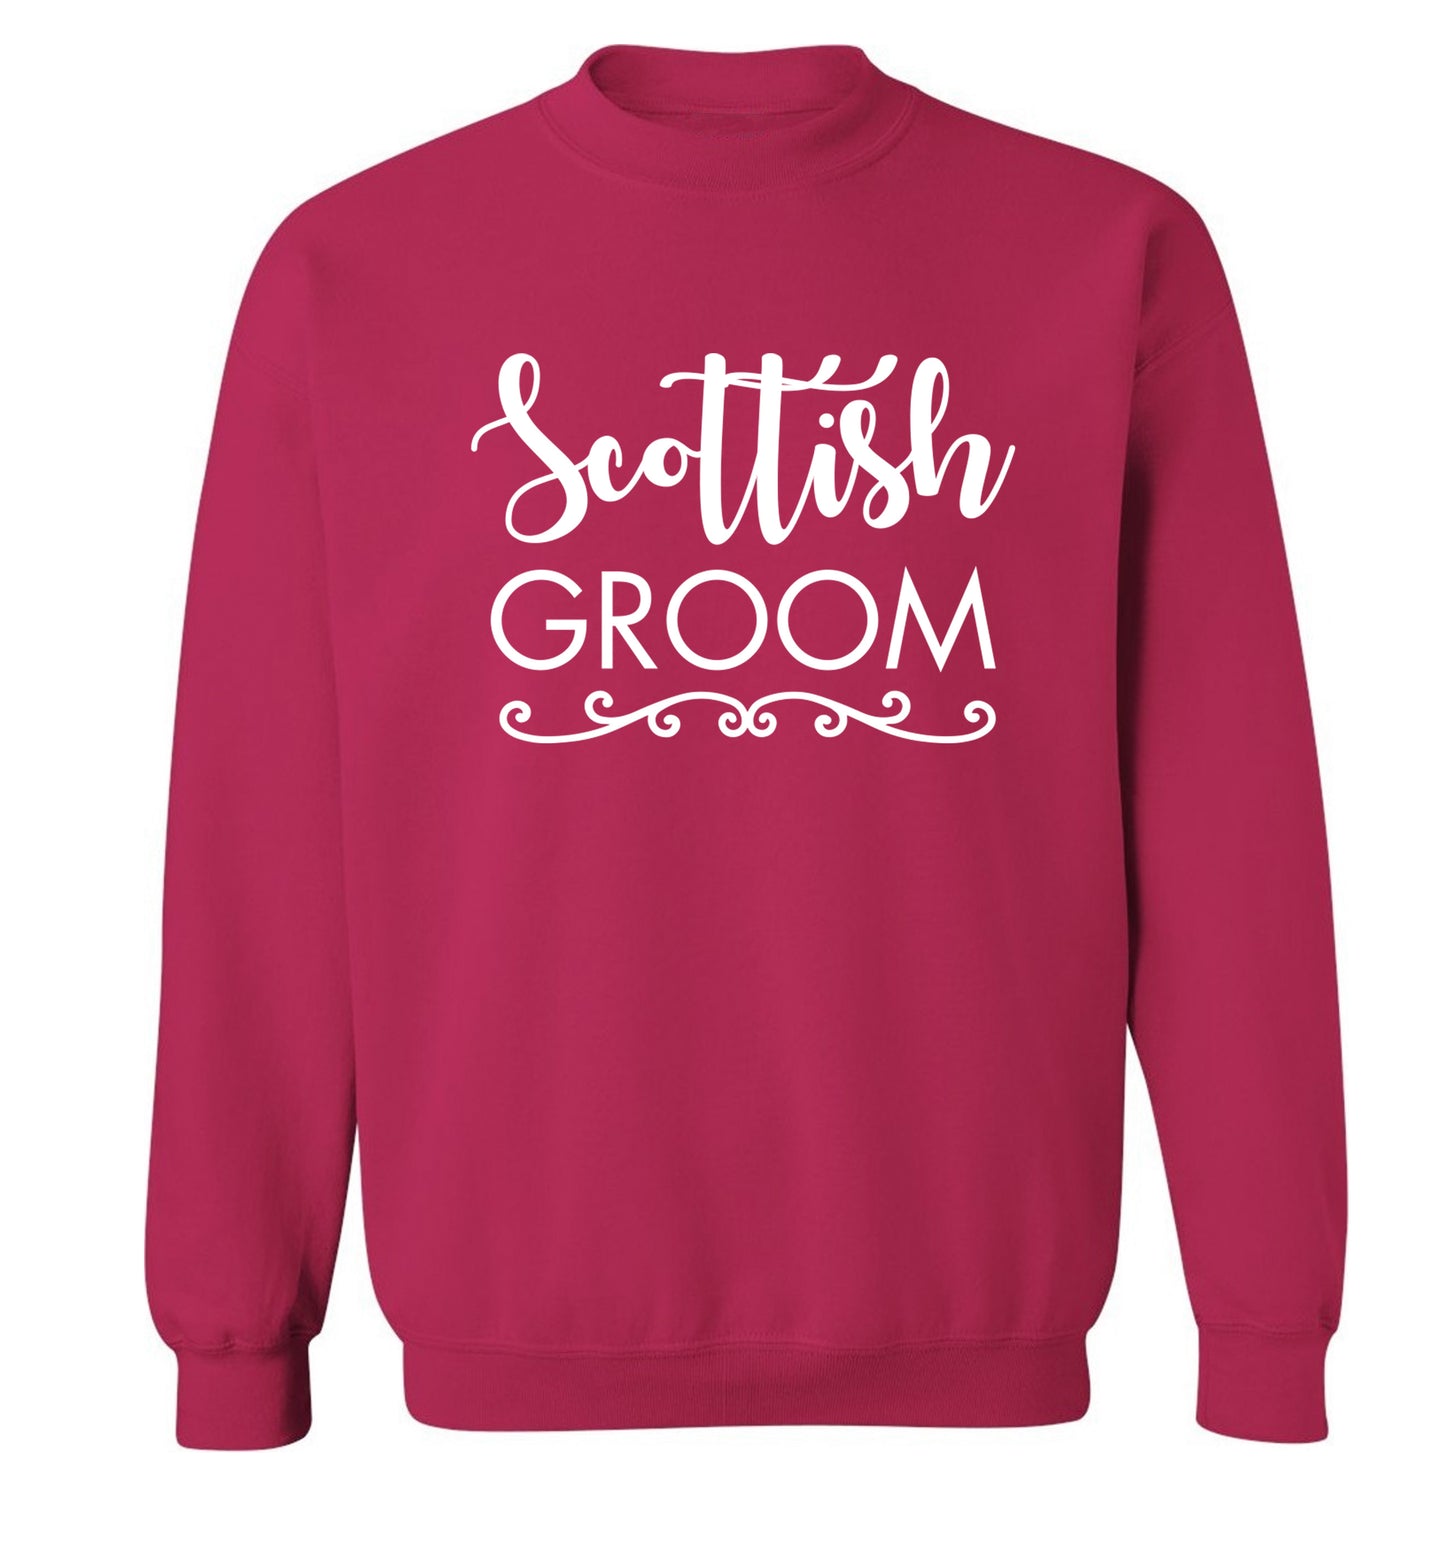 Scottish groom Adult's unisex pink Sweater 2XL